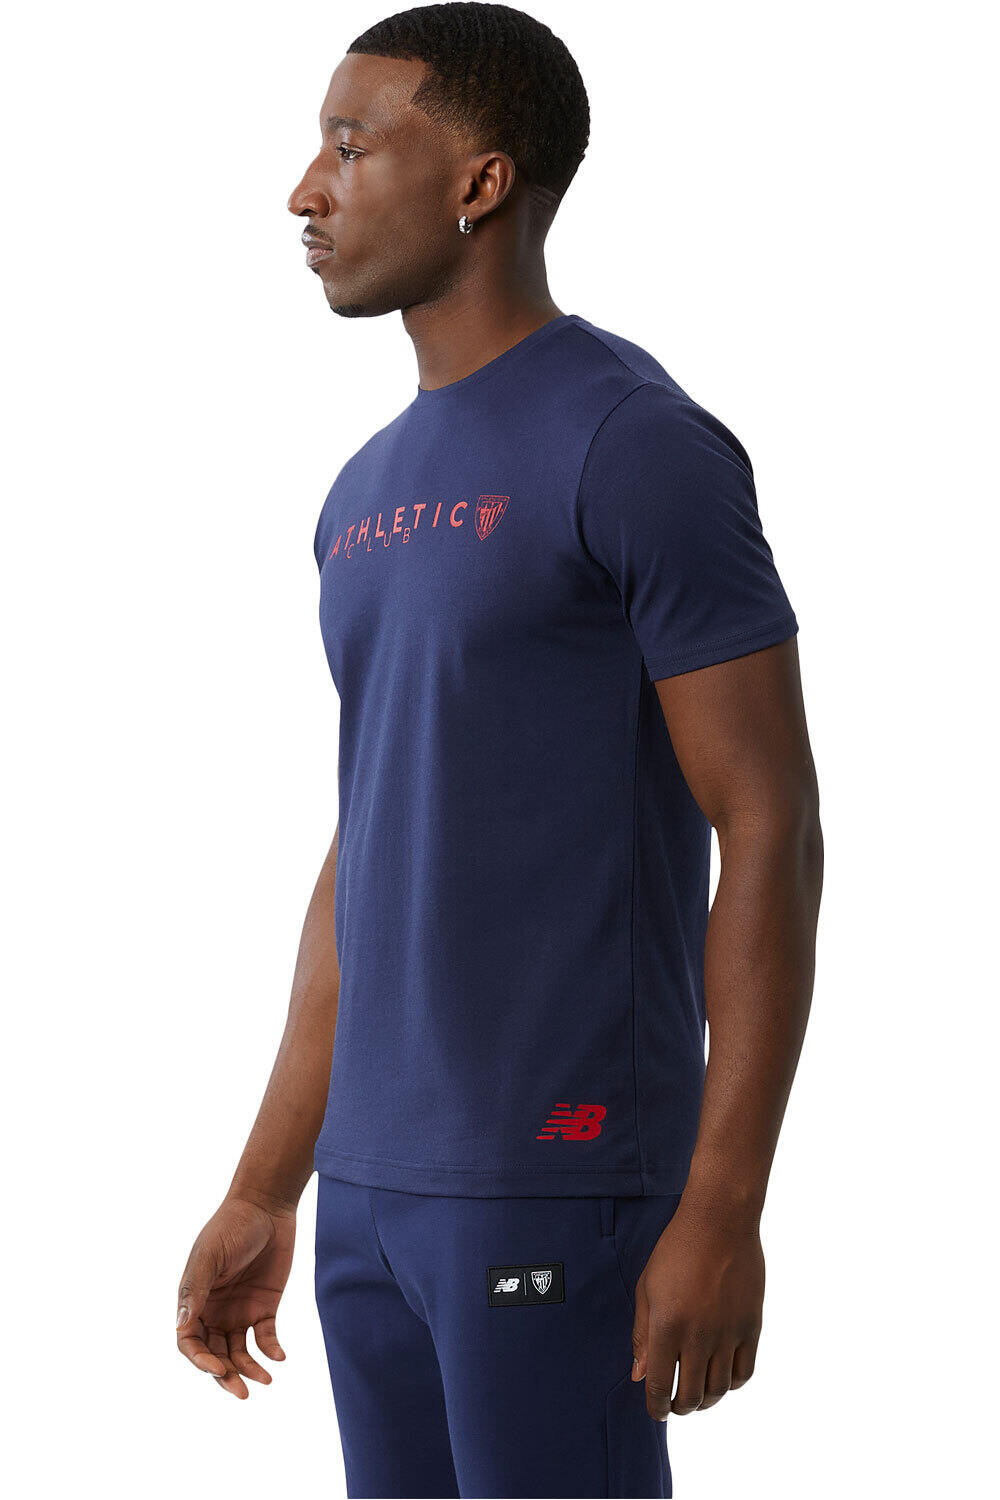 New Balance camiseta de fútbol oficiales ATHL.BILBAO 23 VISERA SPORT RO, vista detalle